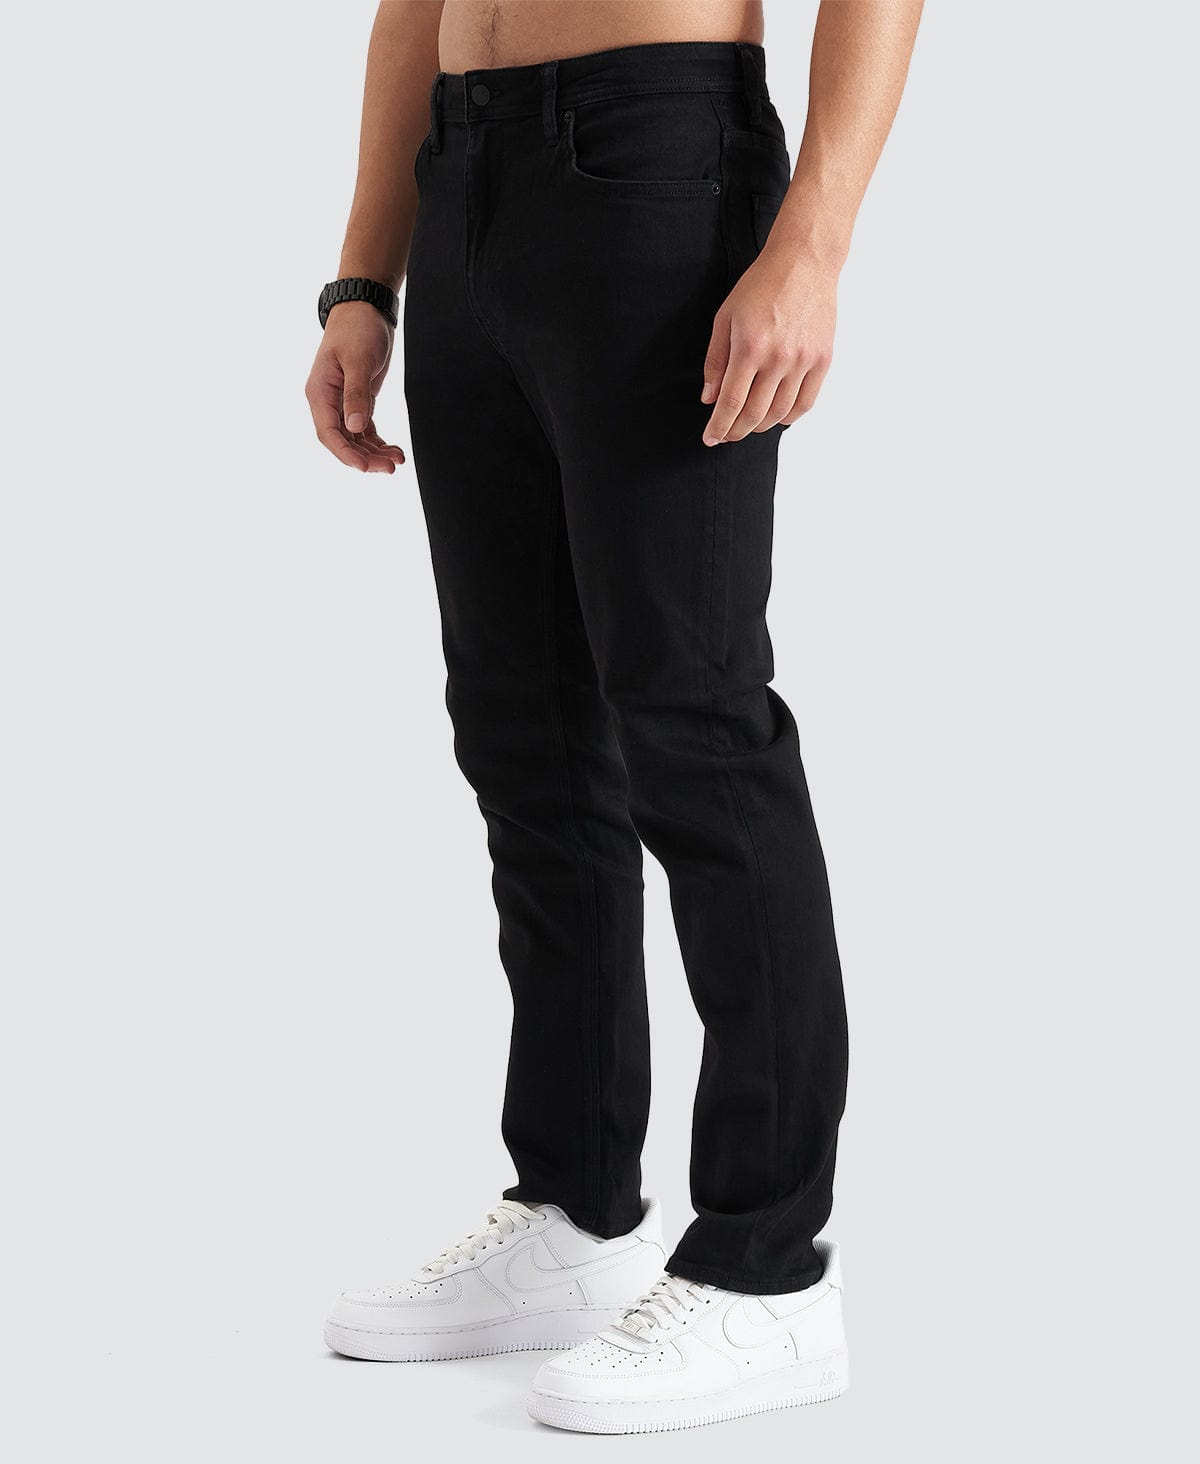 0-DEGREE Jeans Pants Stretch Denim for Men Black : Amazon.in: Fashion